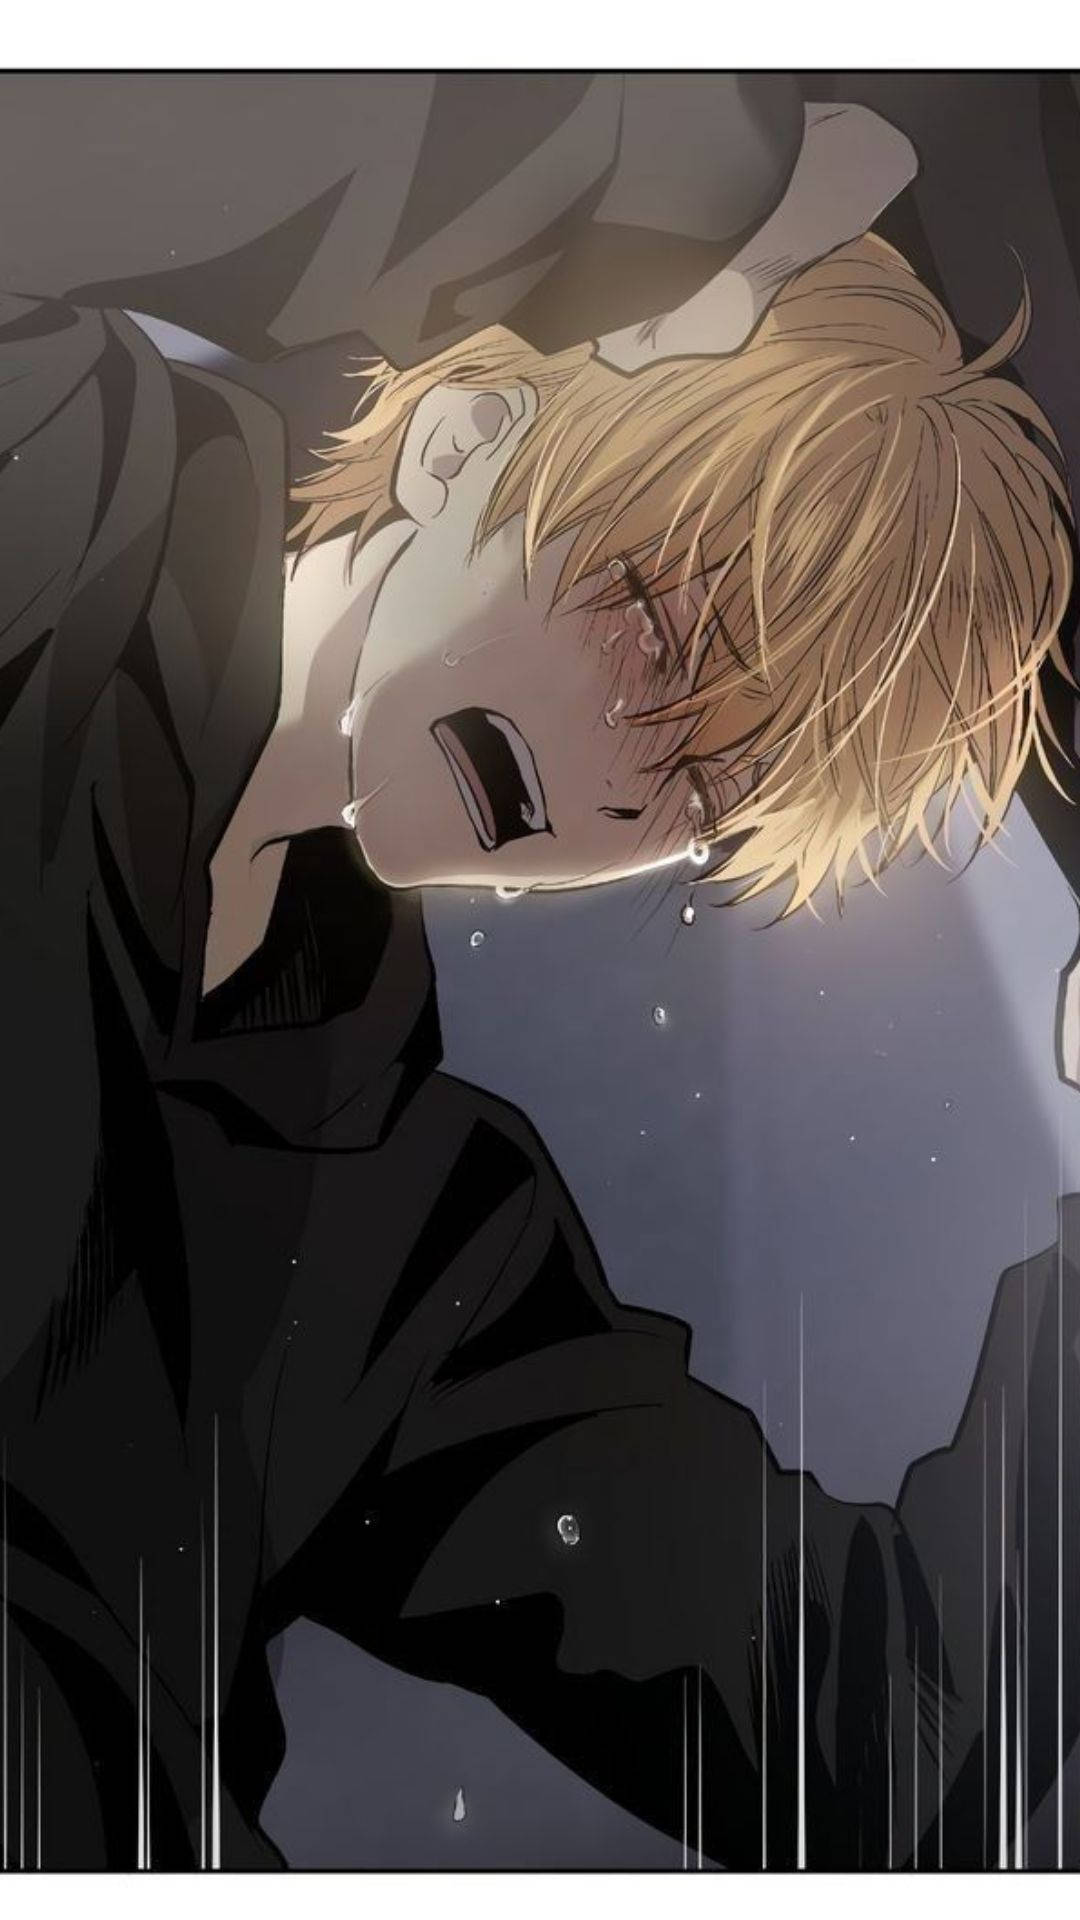 Wailing Anime Boy Sad Aesthetic Wallpaper